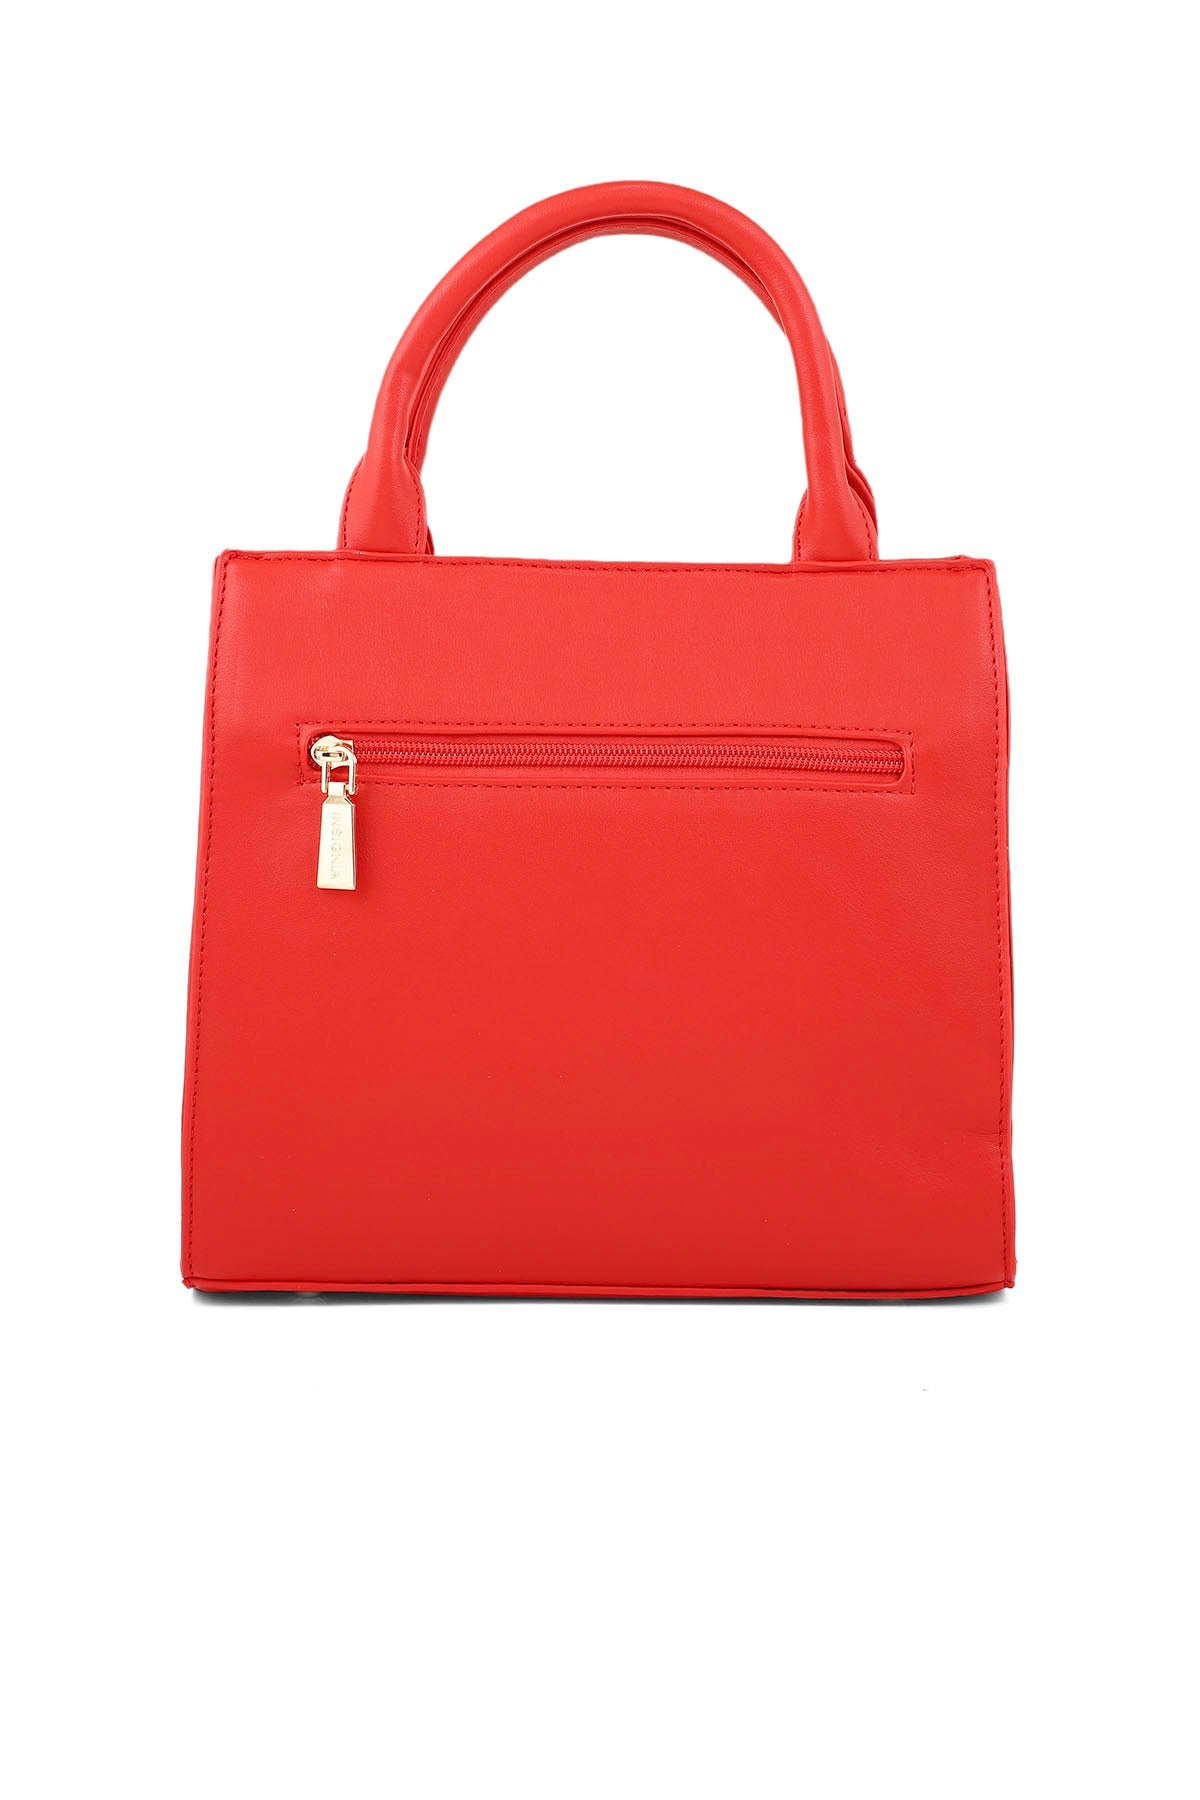 Formal Tote Hand Bags B15066-Red – Insignia PK